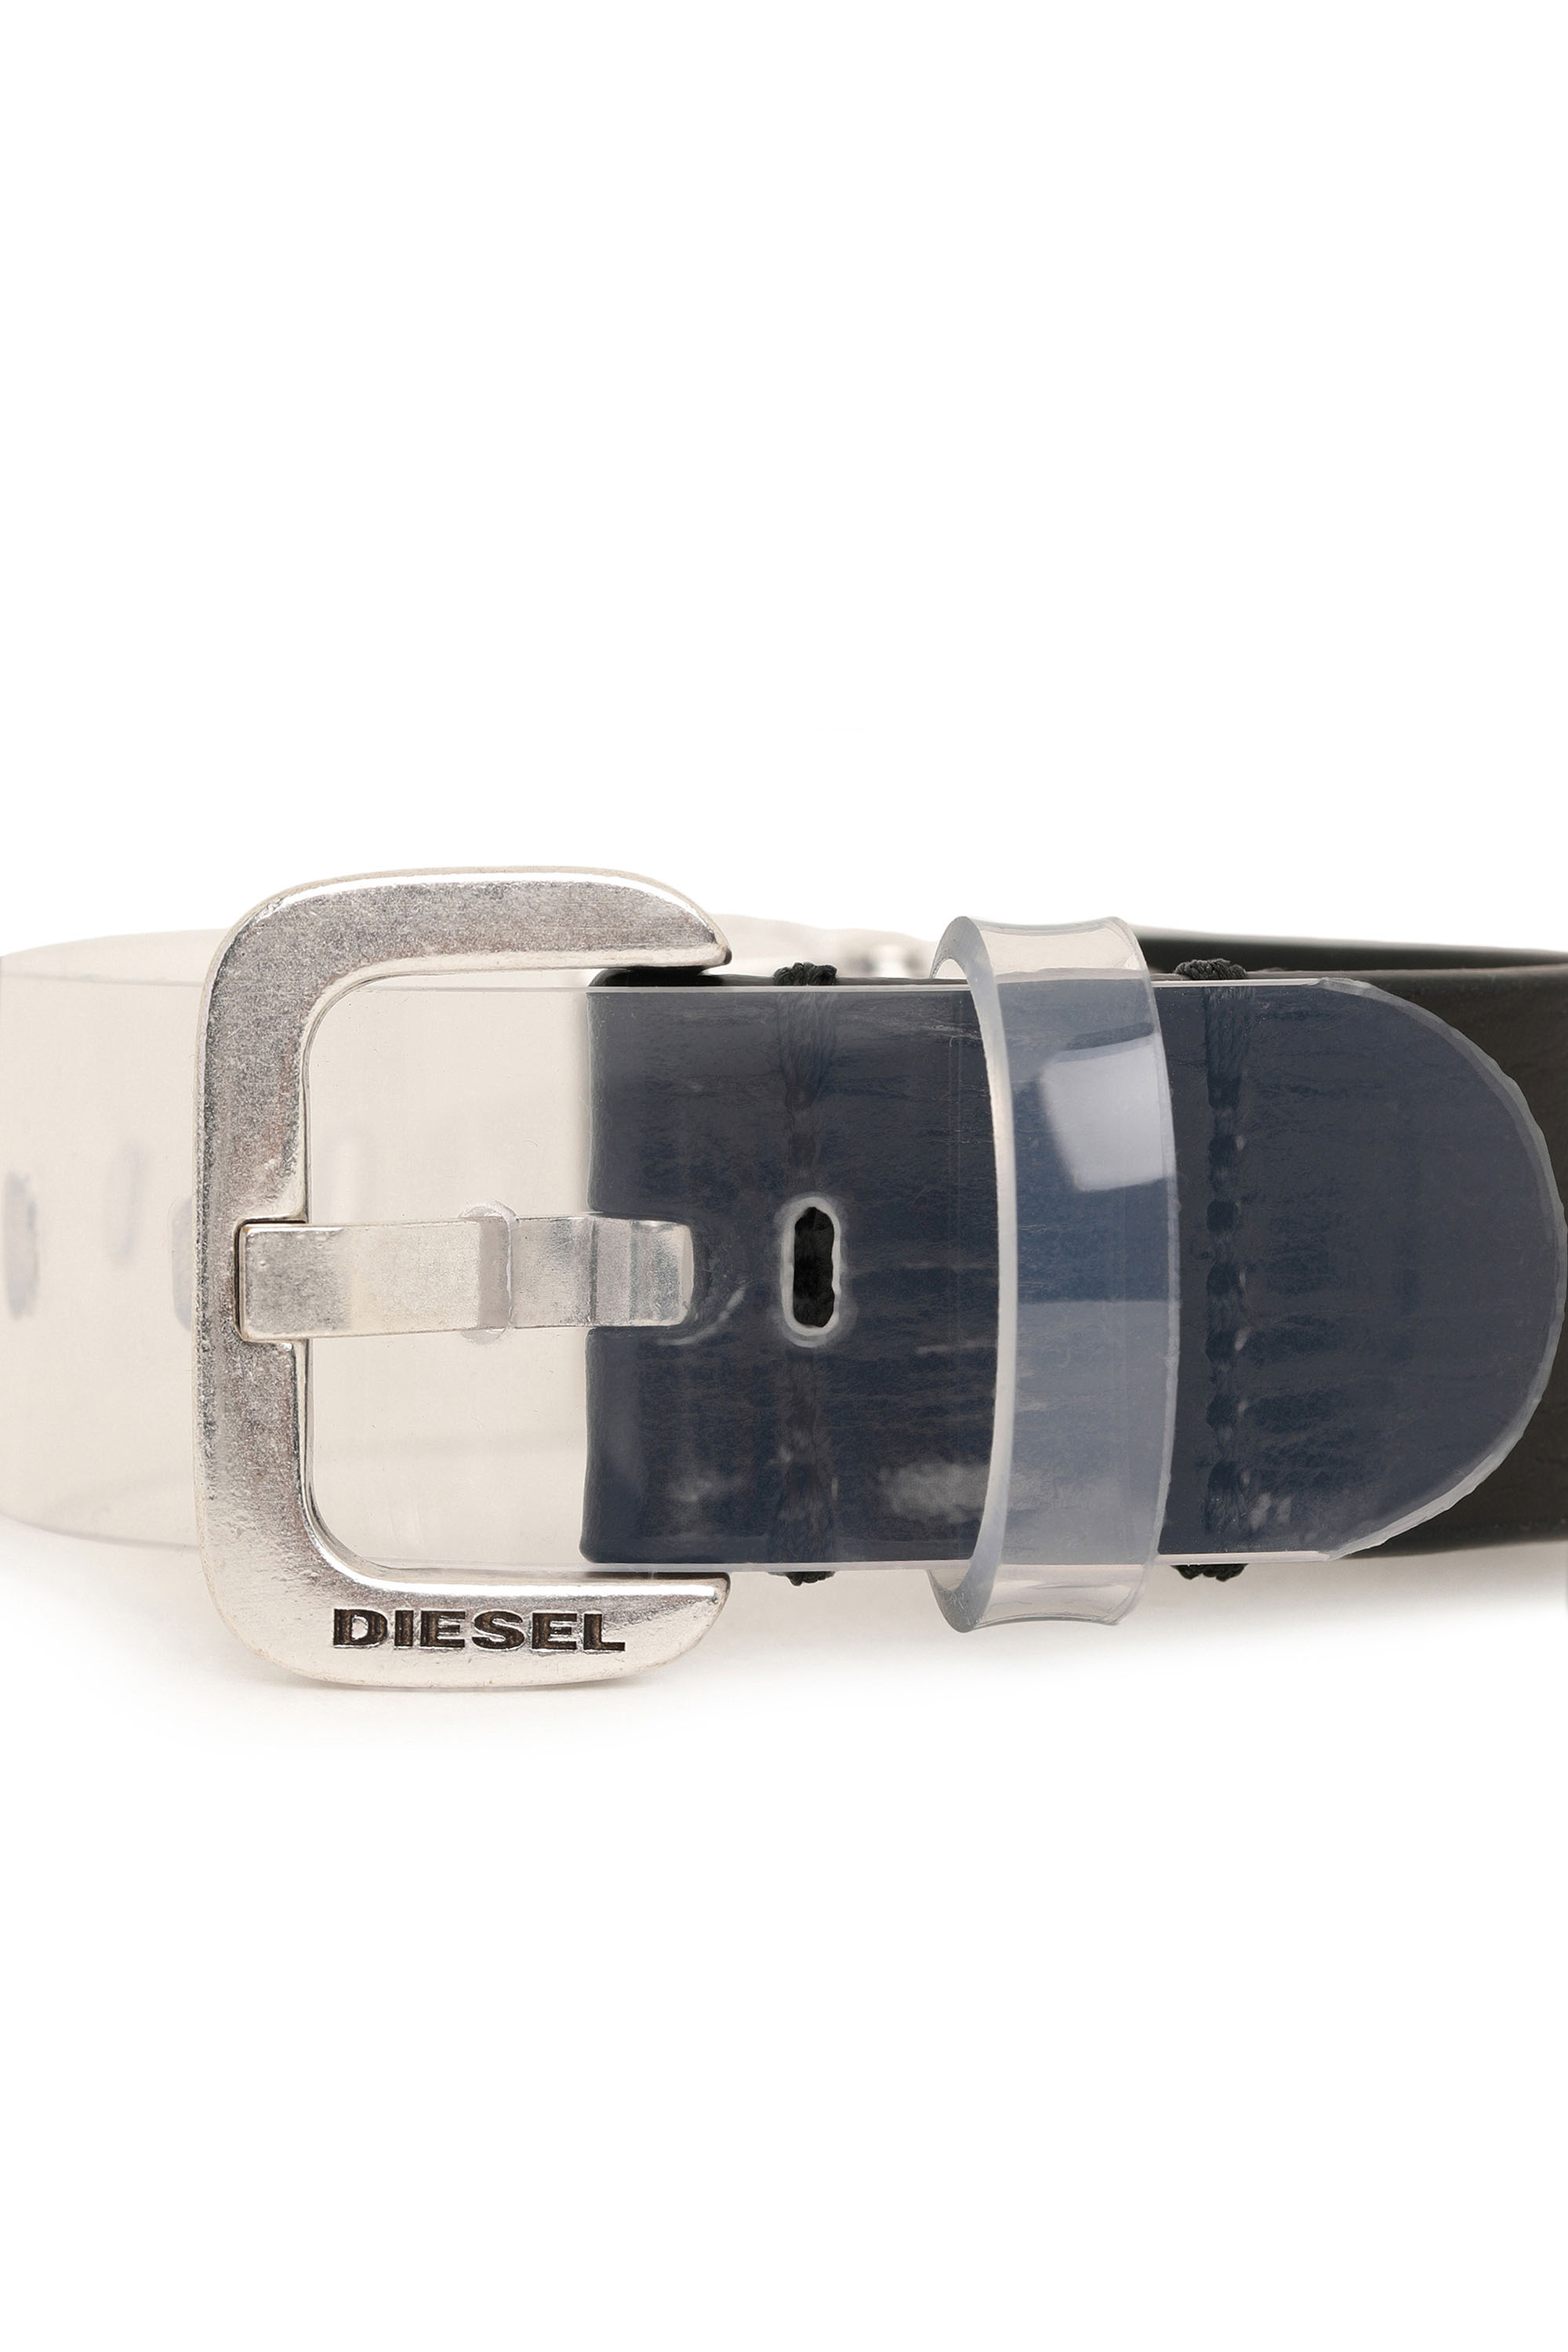 Diesel - A-LEVEL, Black/White - Image 3